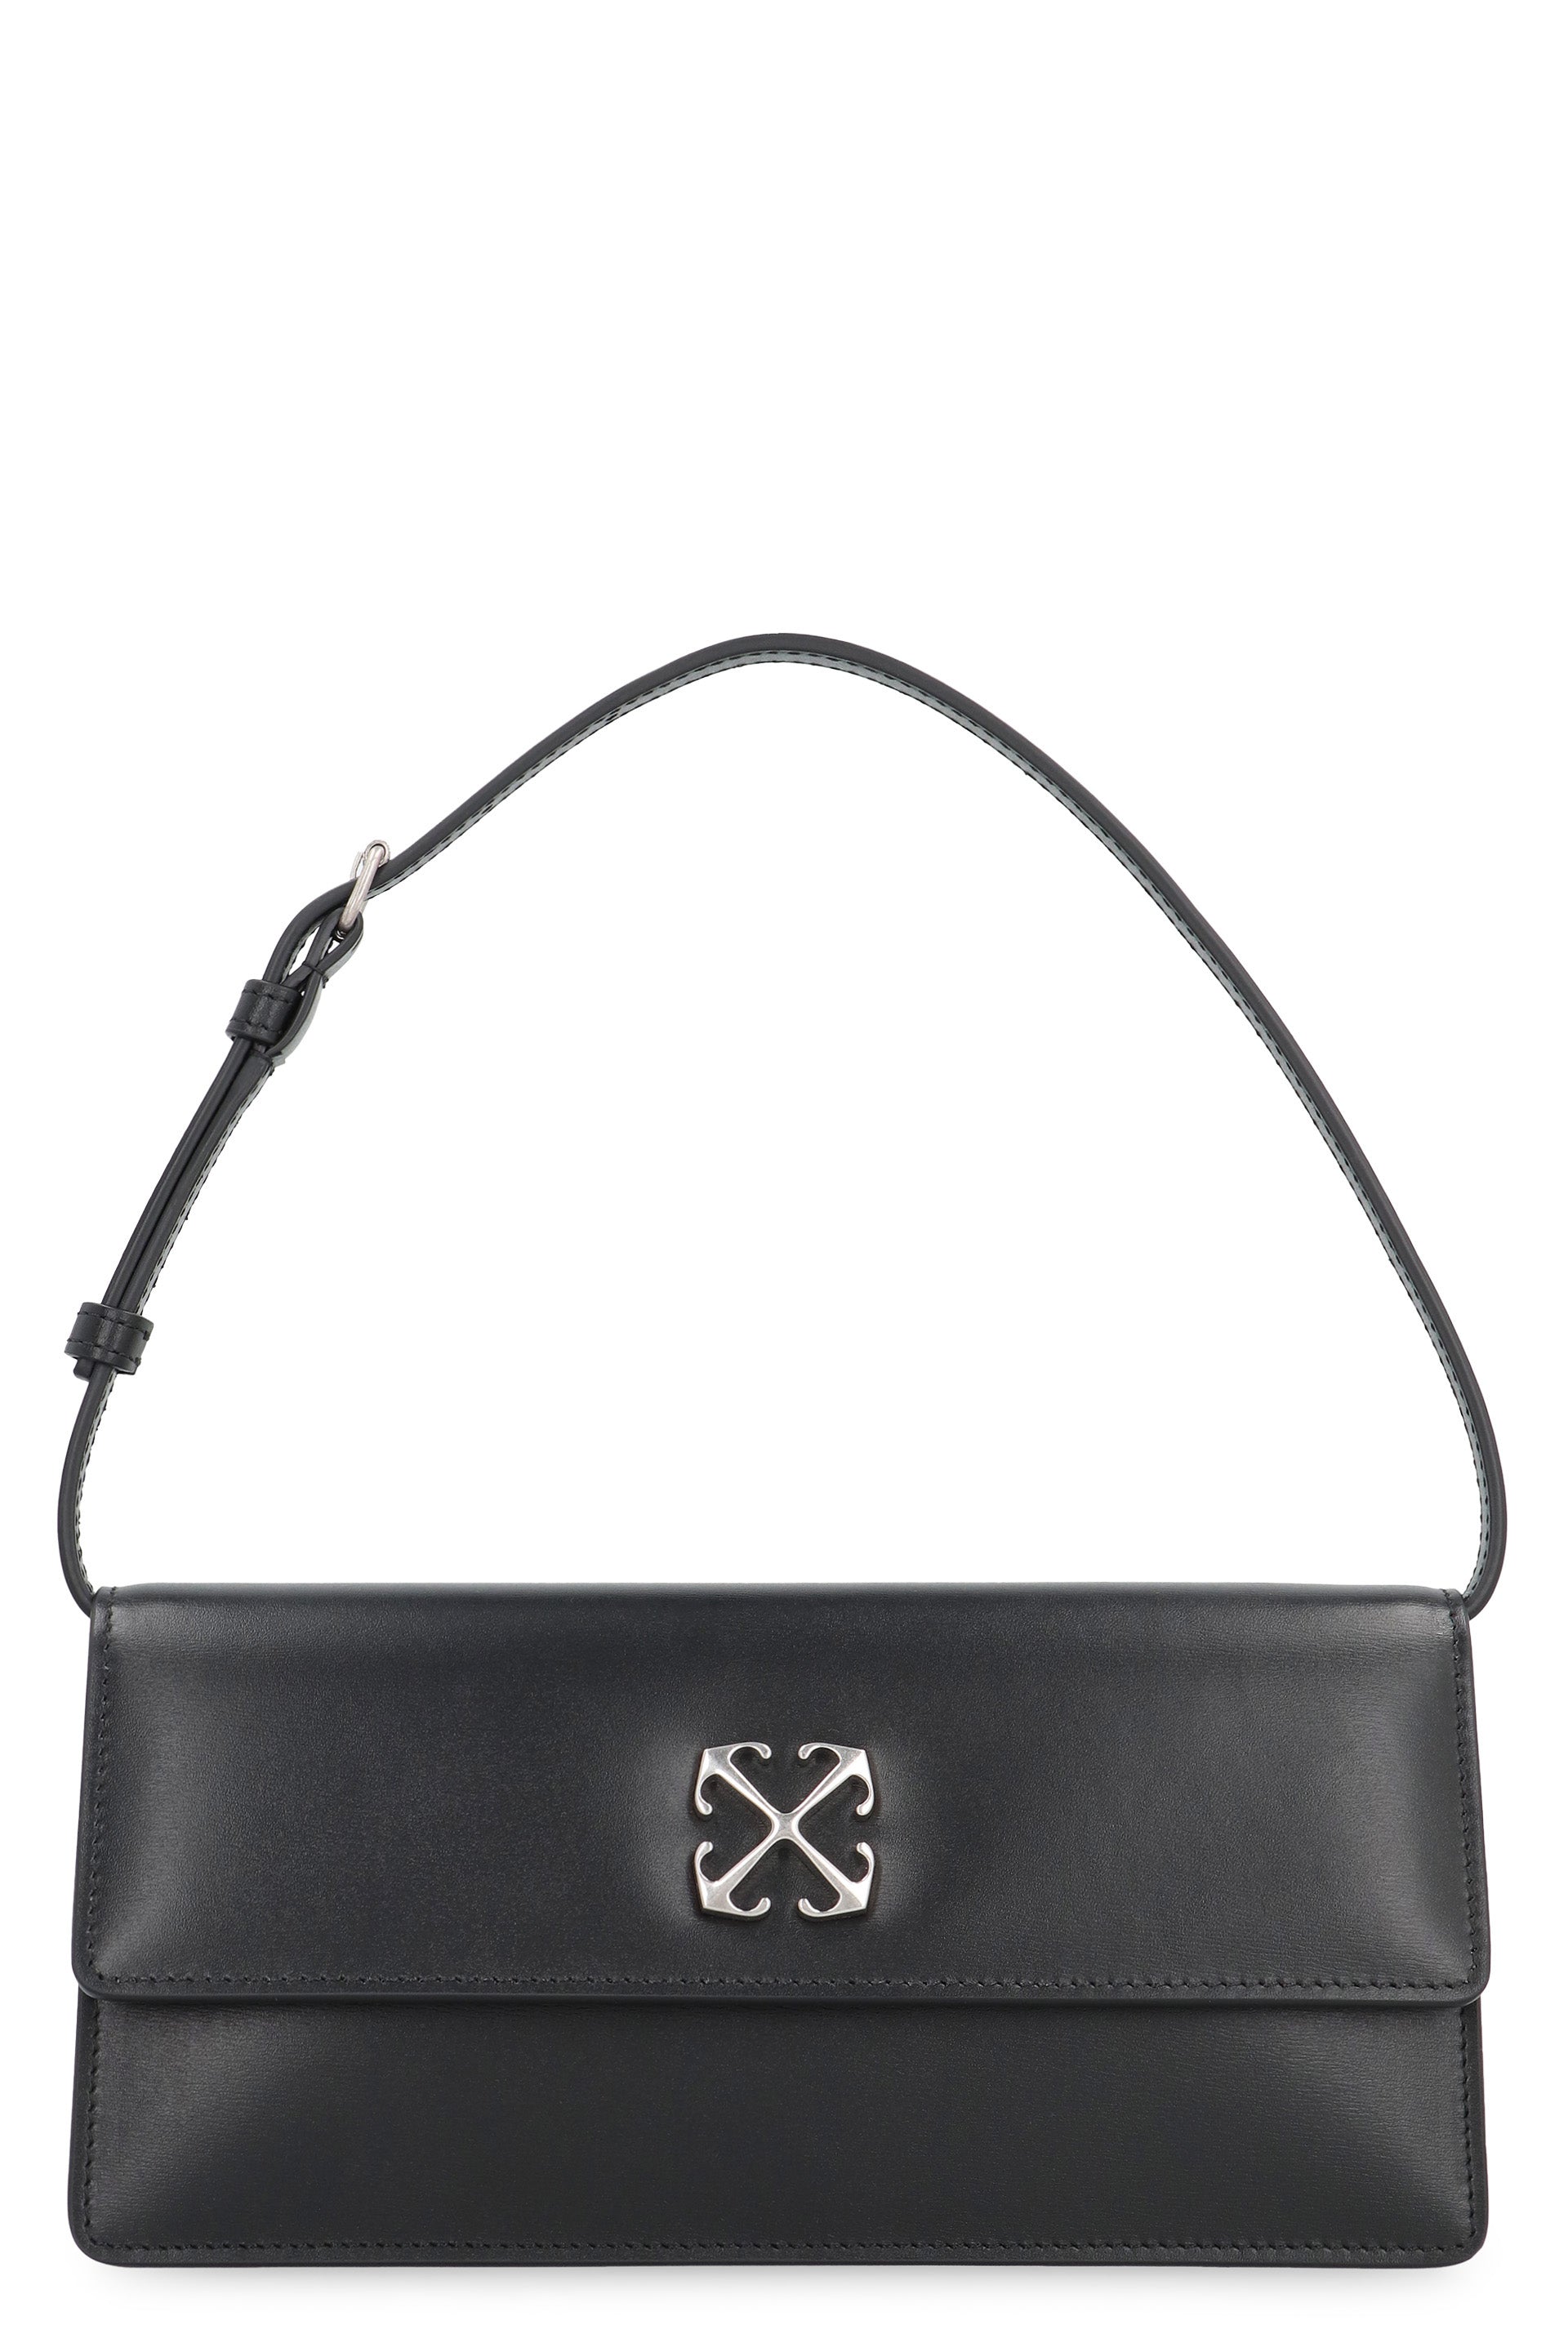 Shop Off-white Luxurious Black Leather Shoulder Handbag For Women